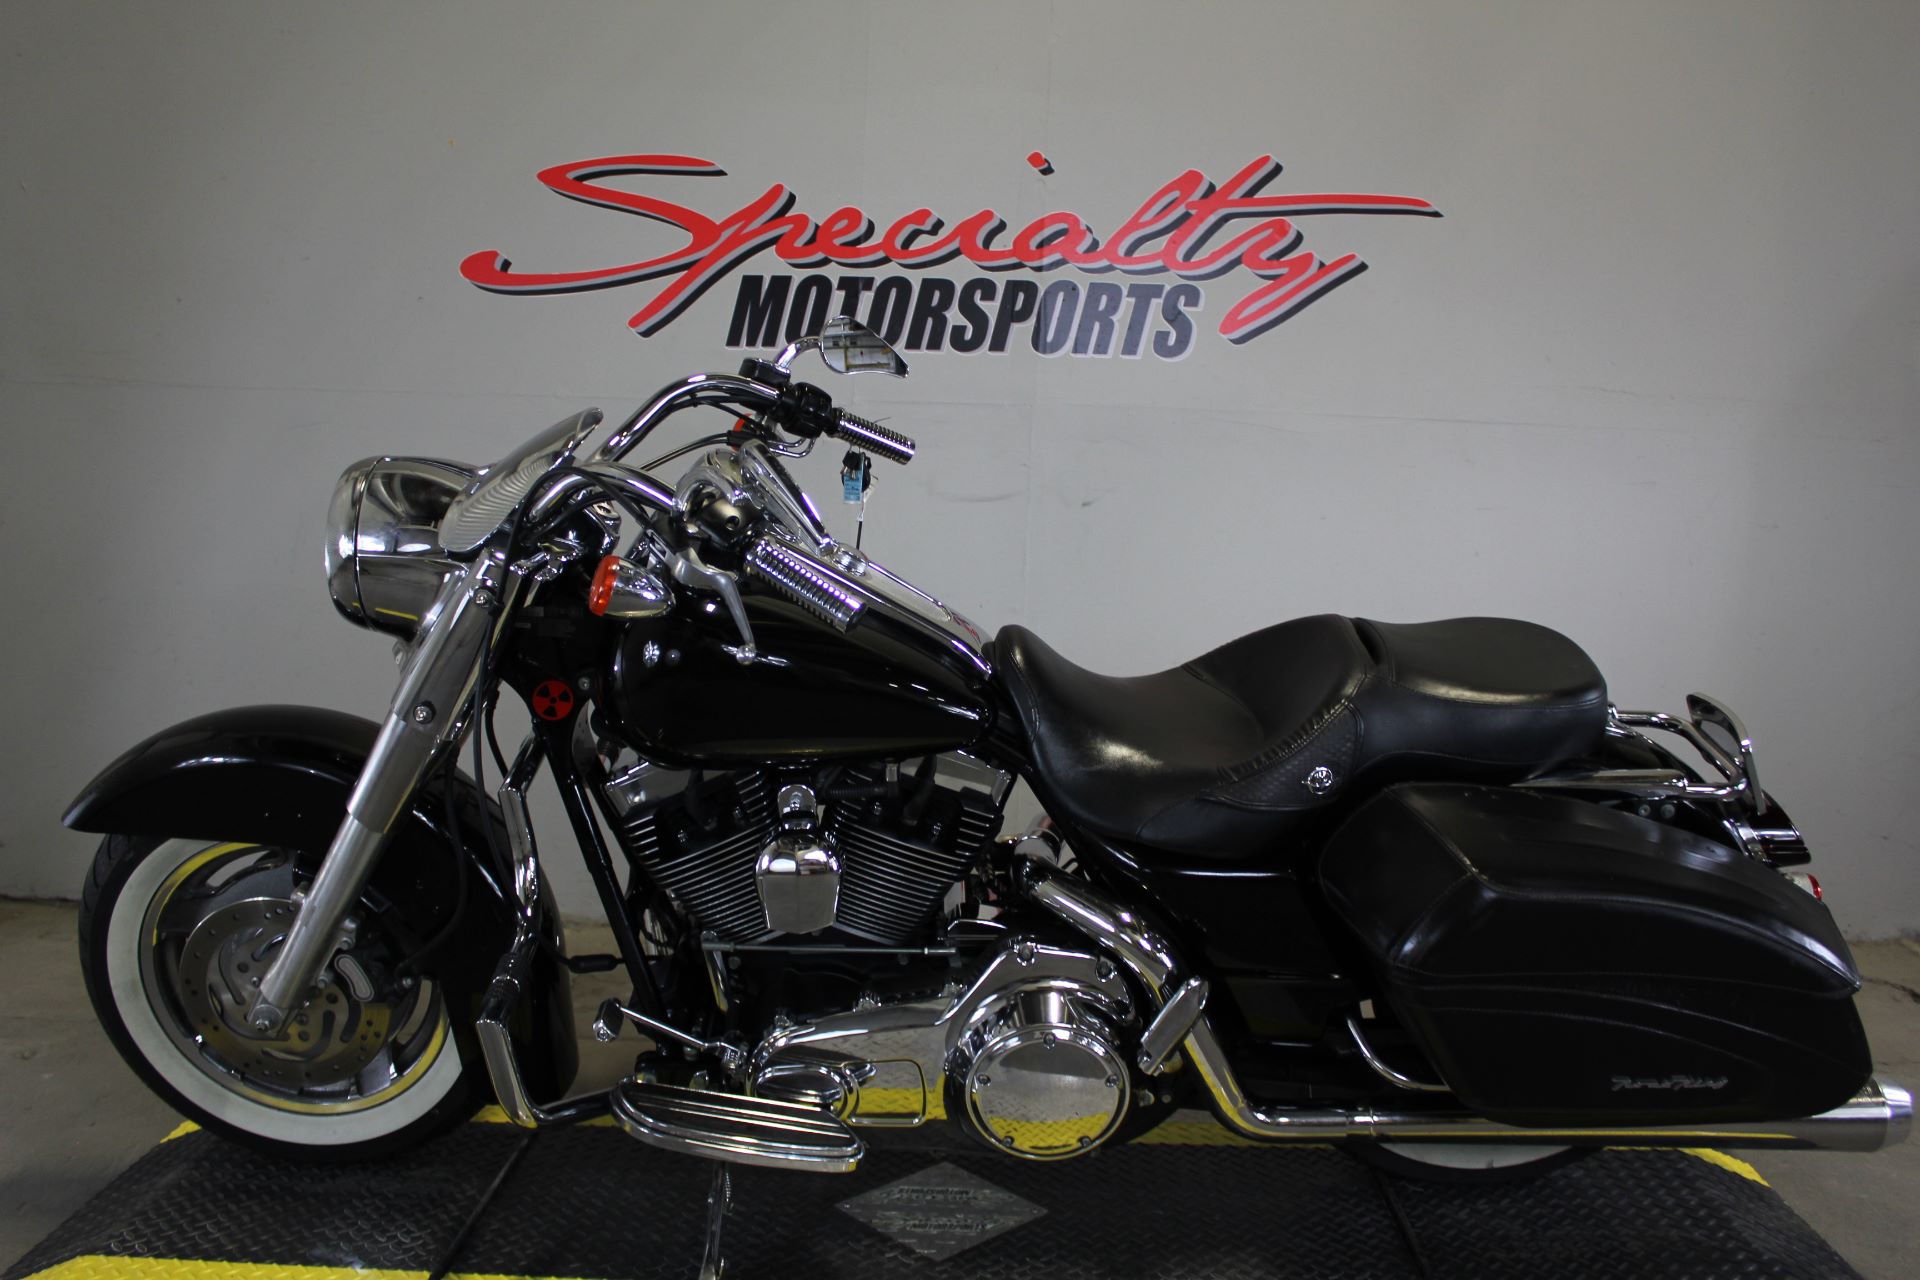 2007 Harley-Davidson Road King® Custom in Sacramento, California - Photo 5